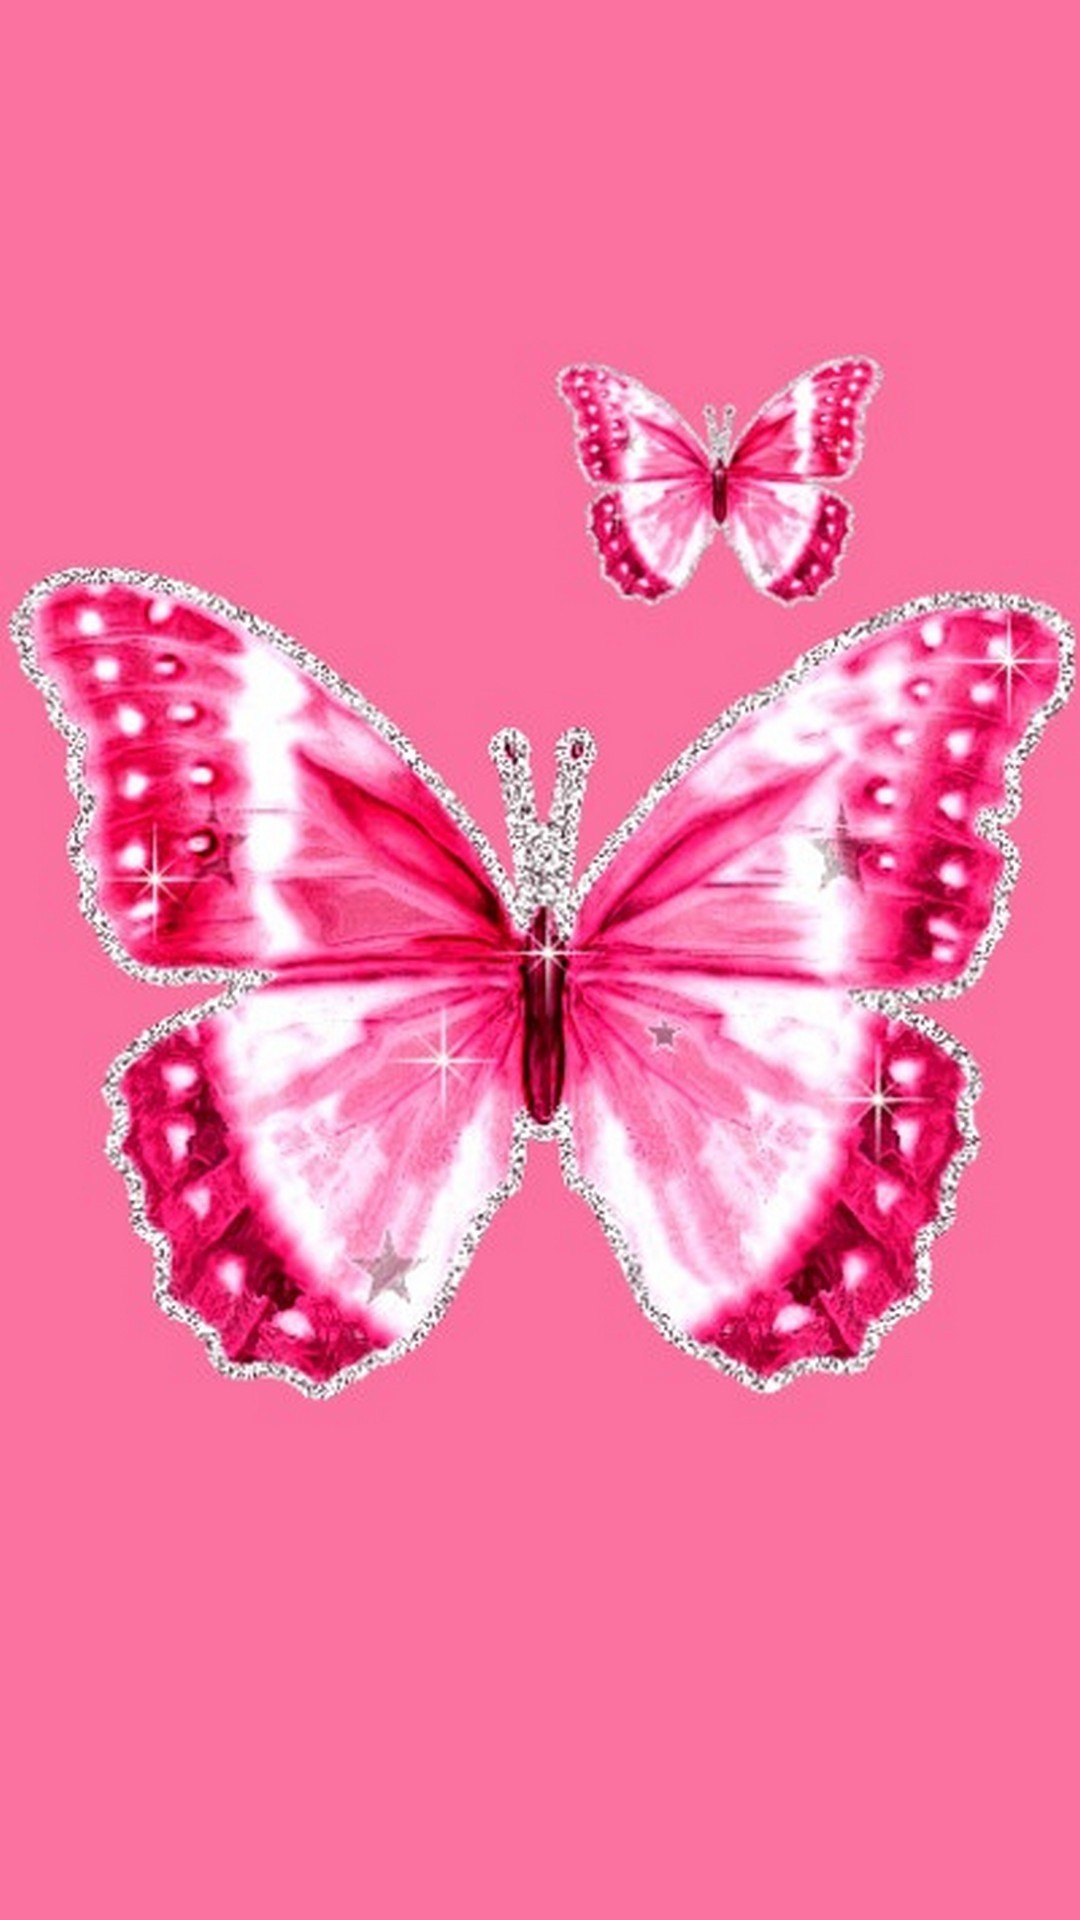 1080x1920 Pink Butterfly Wallpaper